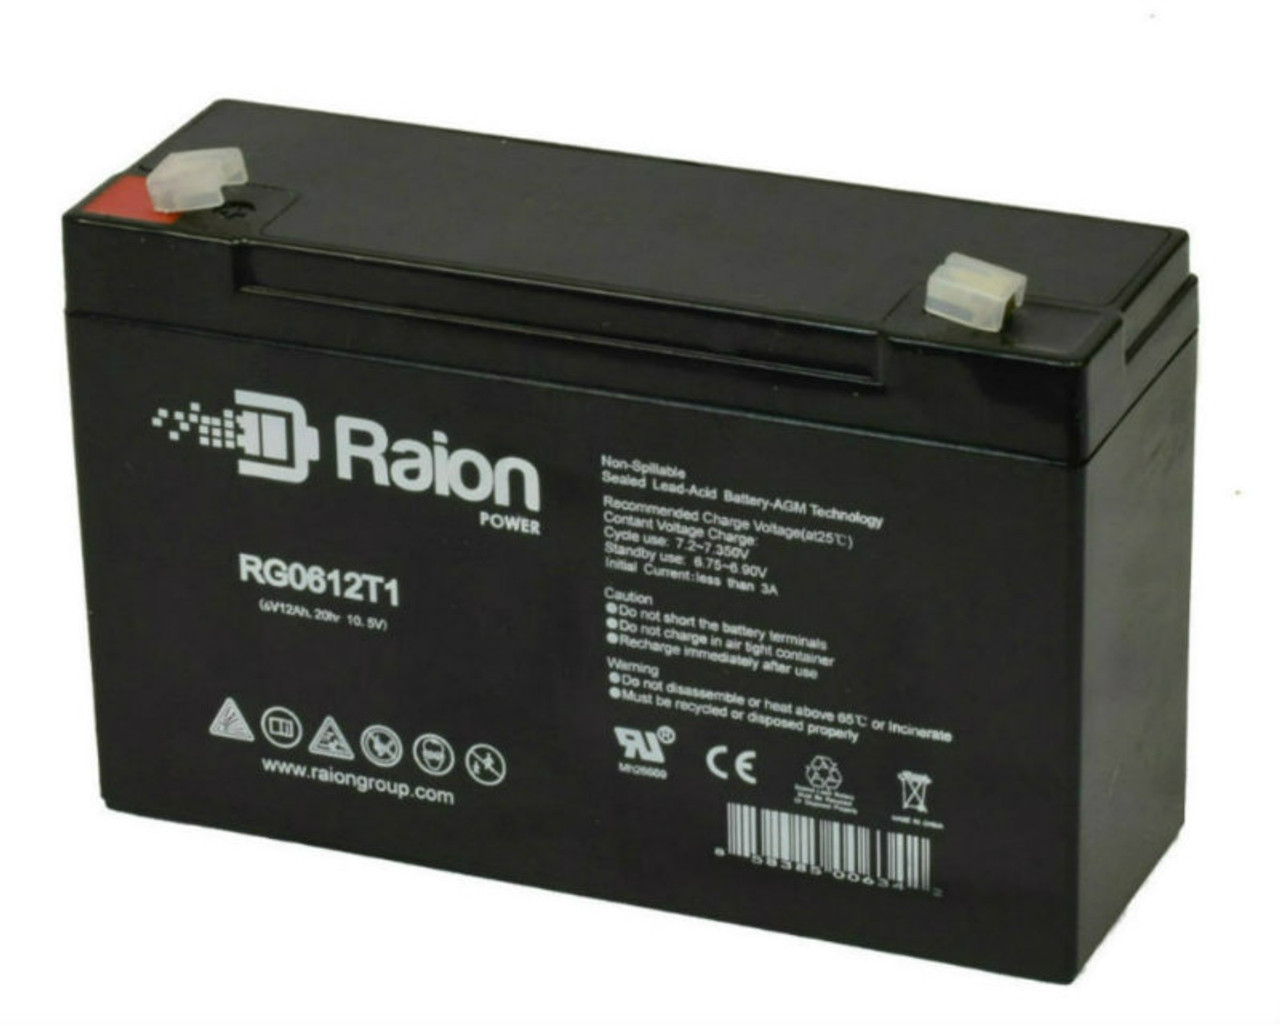 Raion Power RG06120T1 6V 12Ah Replacement UPS Battery Cartridge for Minuteman BP24V10